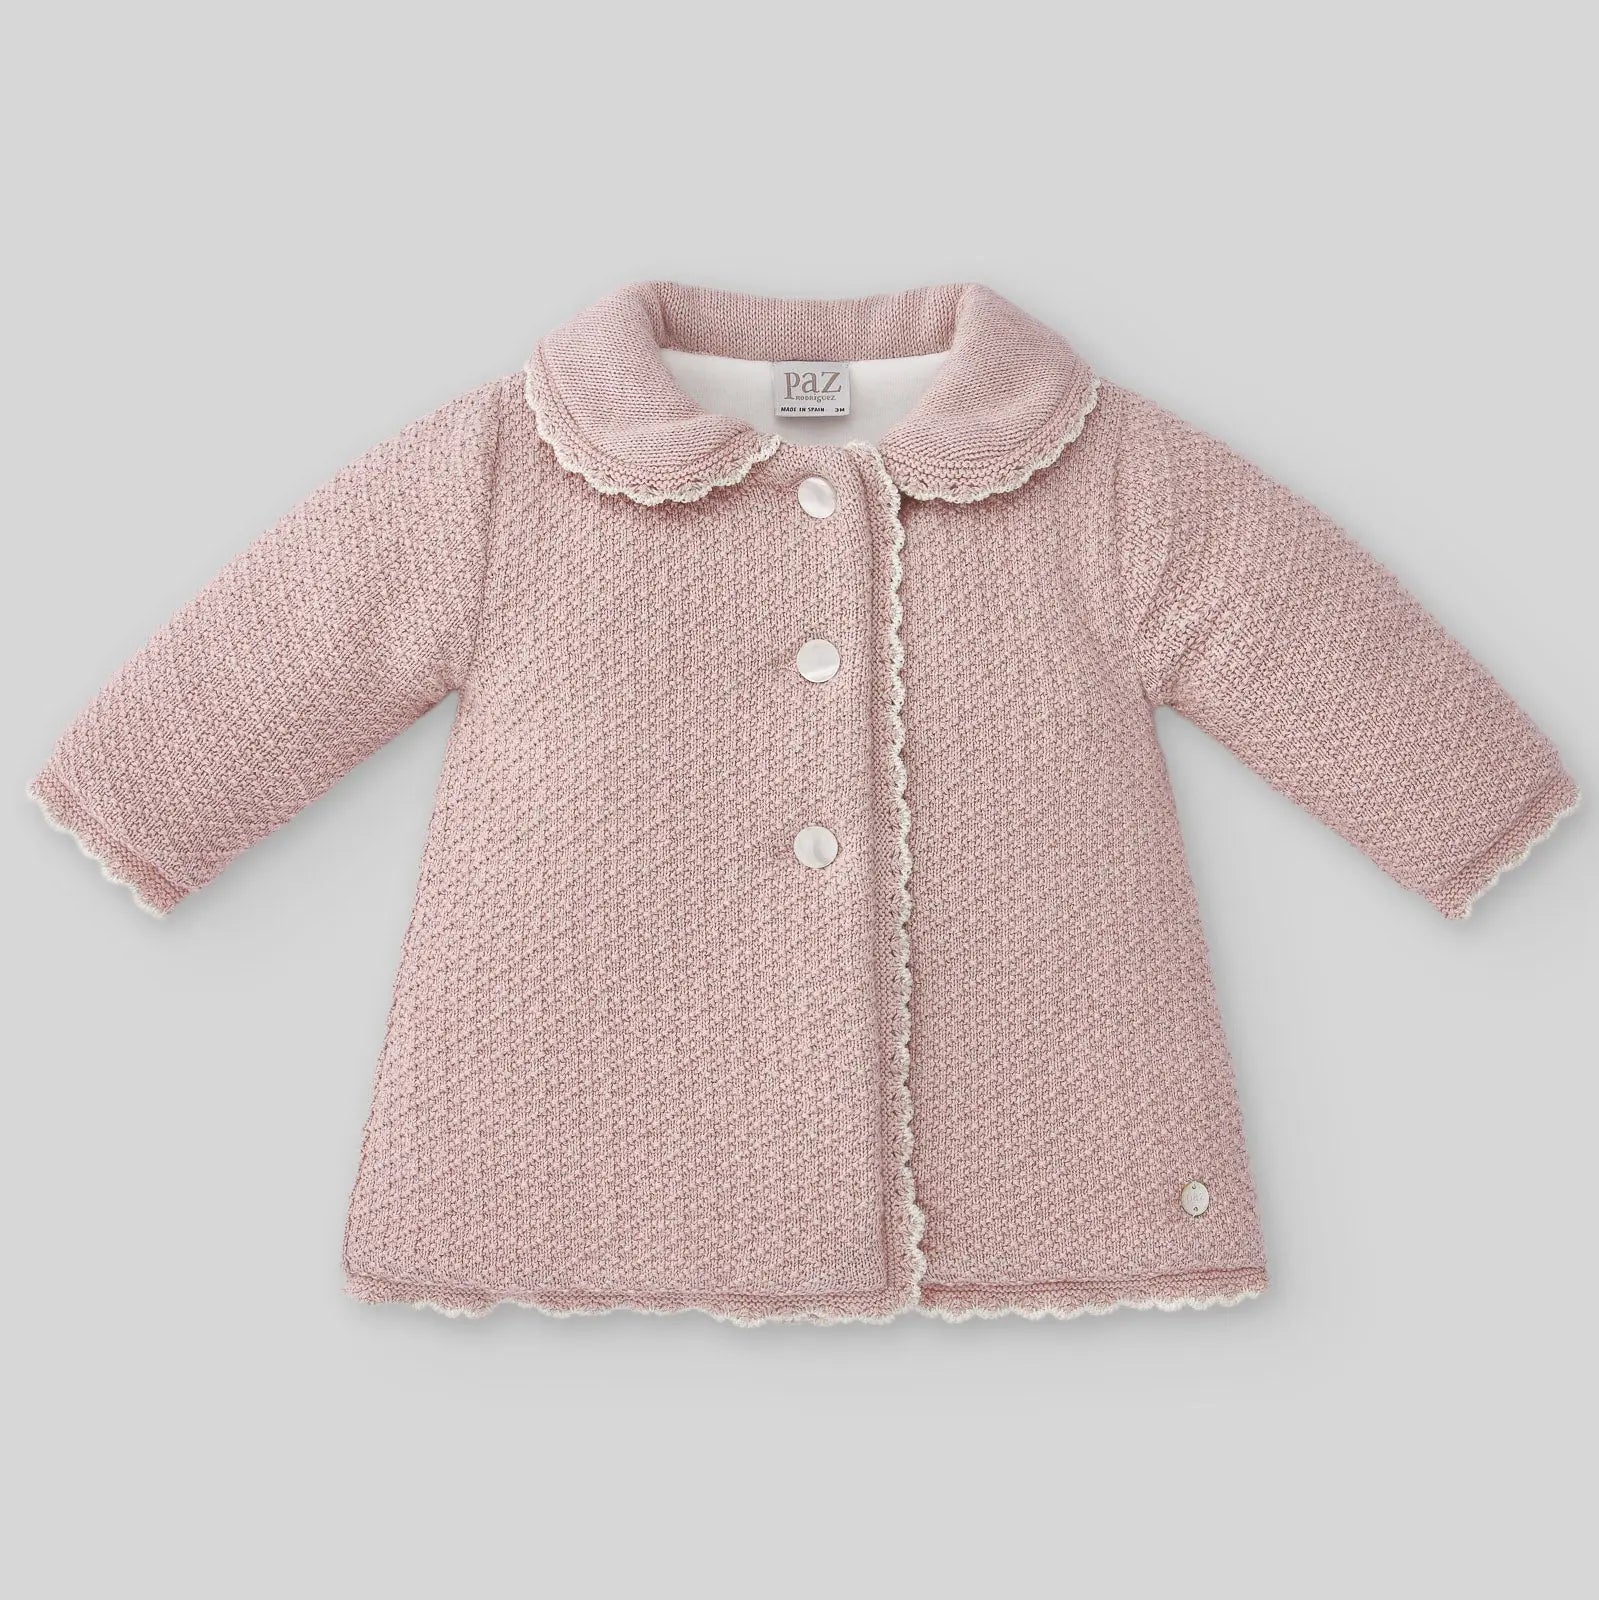 Baby Girls Knit Coat - Powder Pink-Little outfits-Paz Rodriguez-Blue Almonds-London-South Kensington